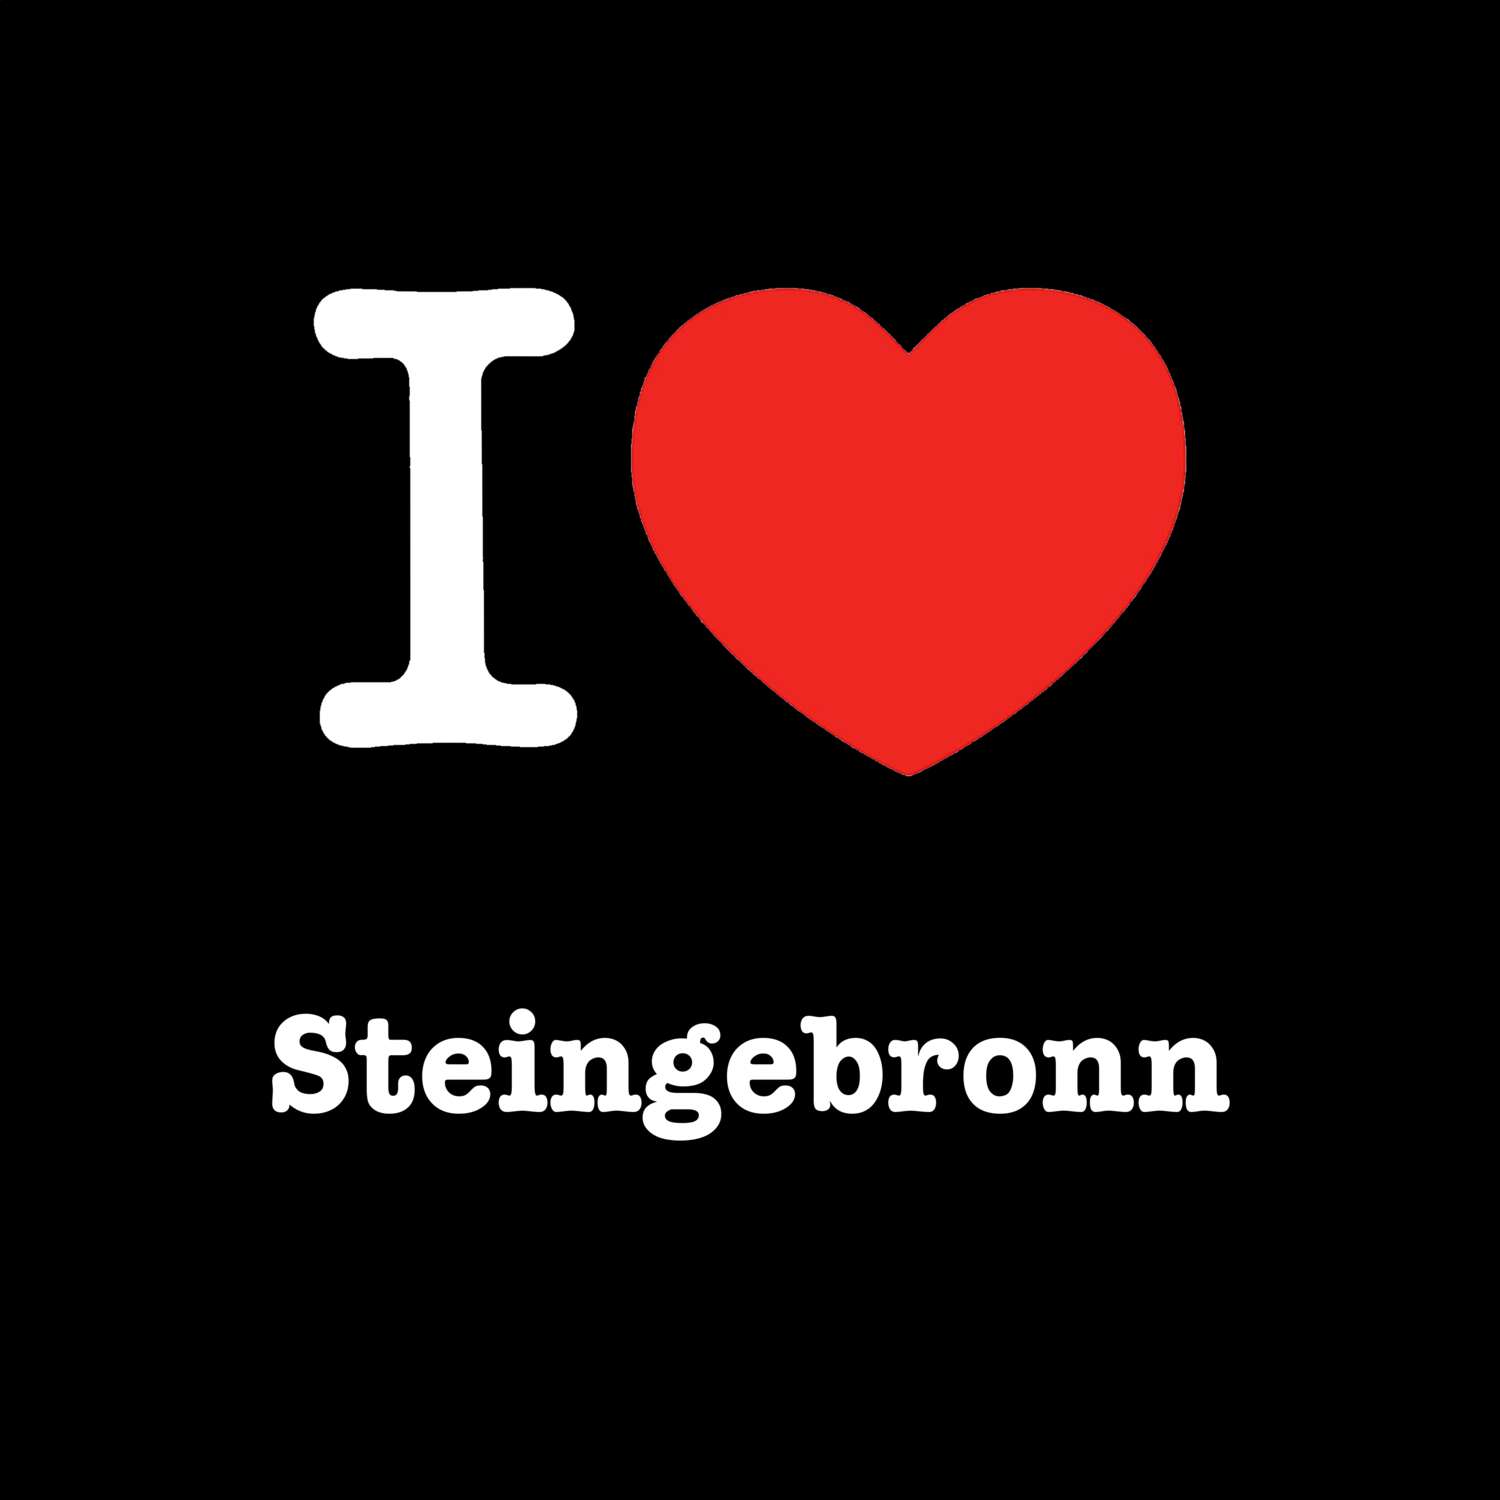 Steingebronn T-Shirt »I love«